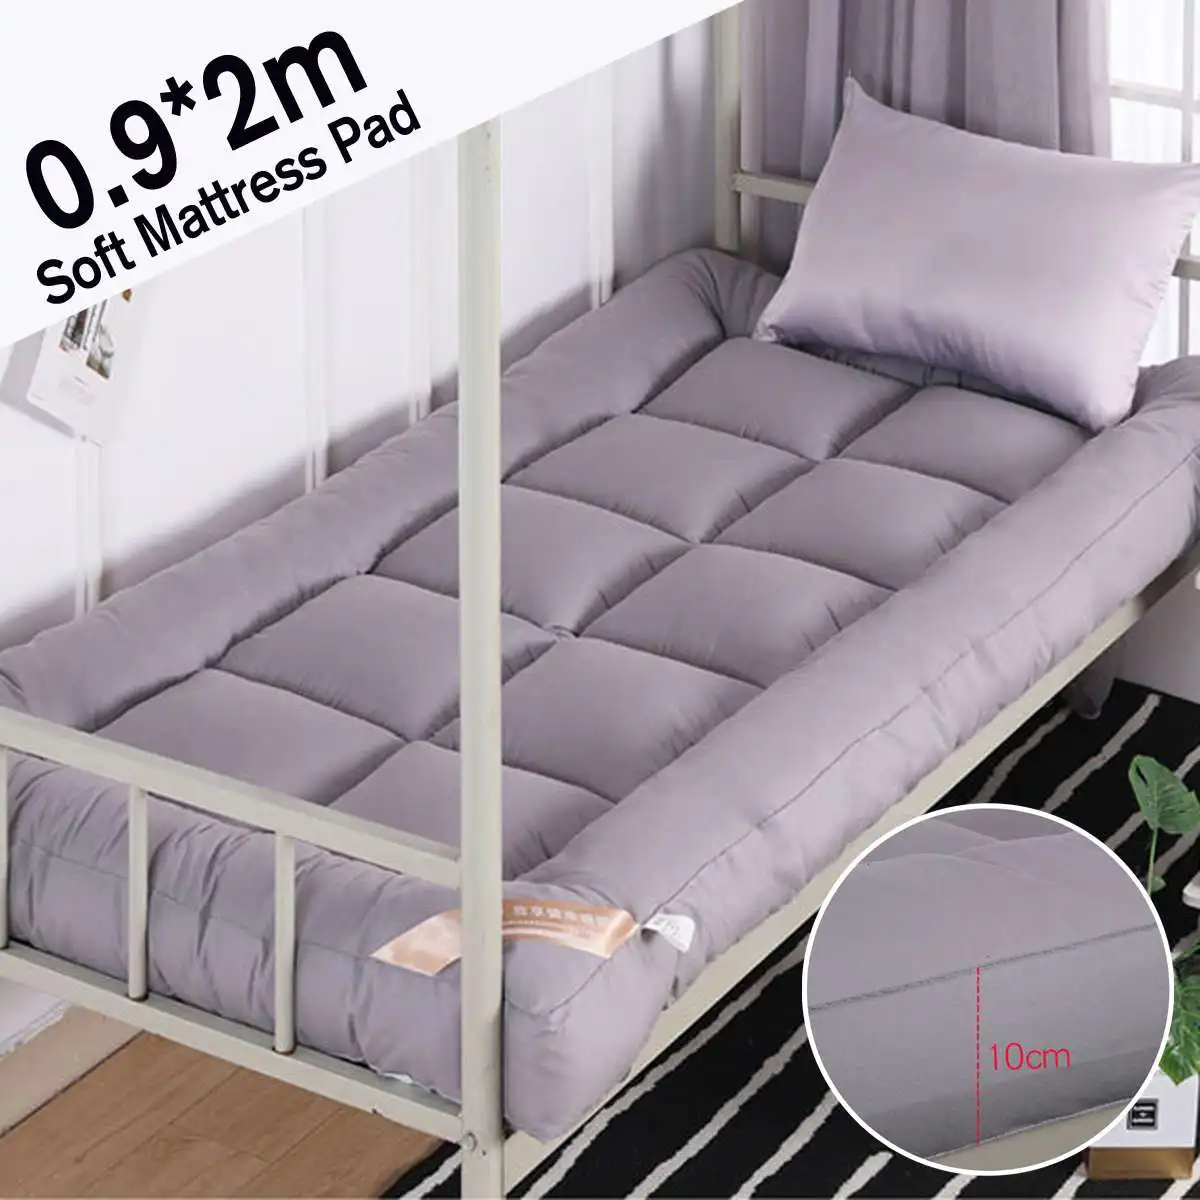 

Soft Mattress 90x200cm Ergonomic 10cm Thickness Foldable student dormitory Mattresses Cotton Cover Tatami Single Bed Size